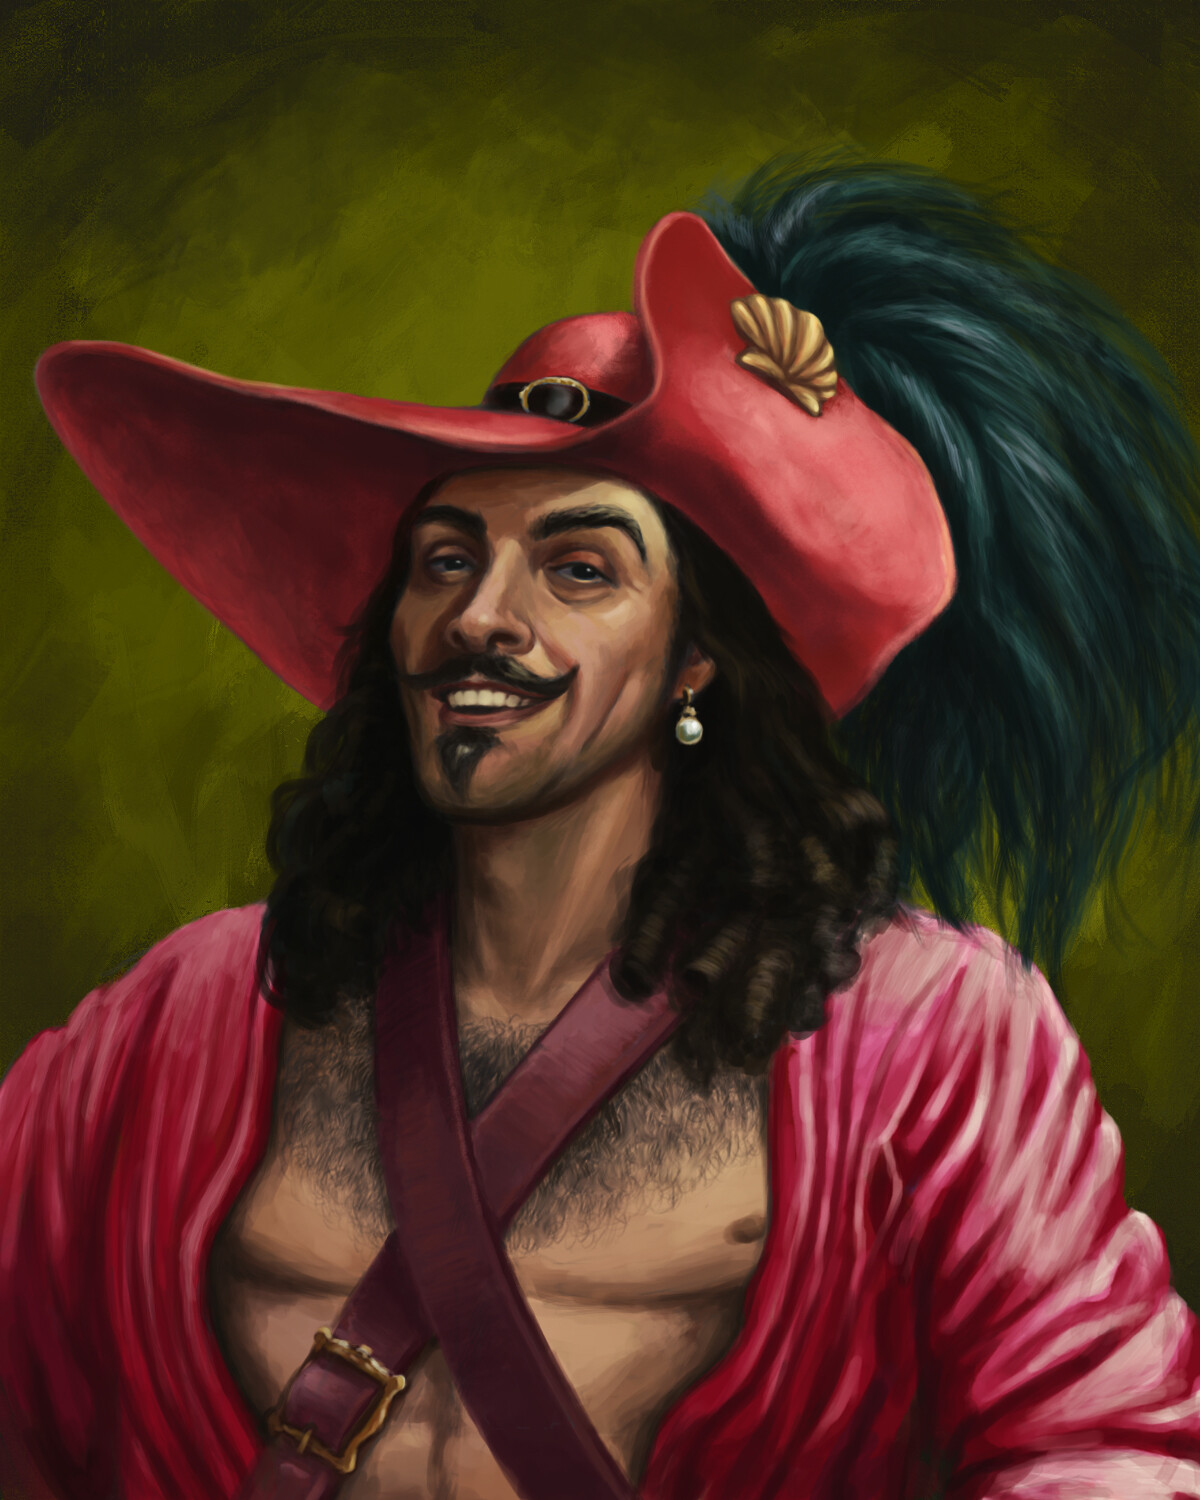 A portrait of the flamboyant Captain Zord.